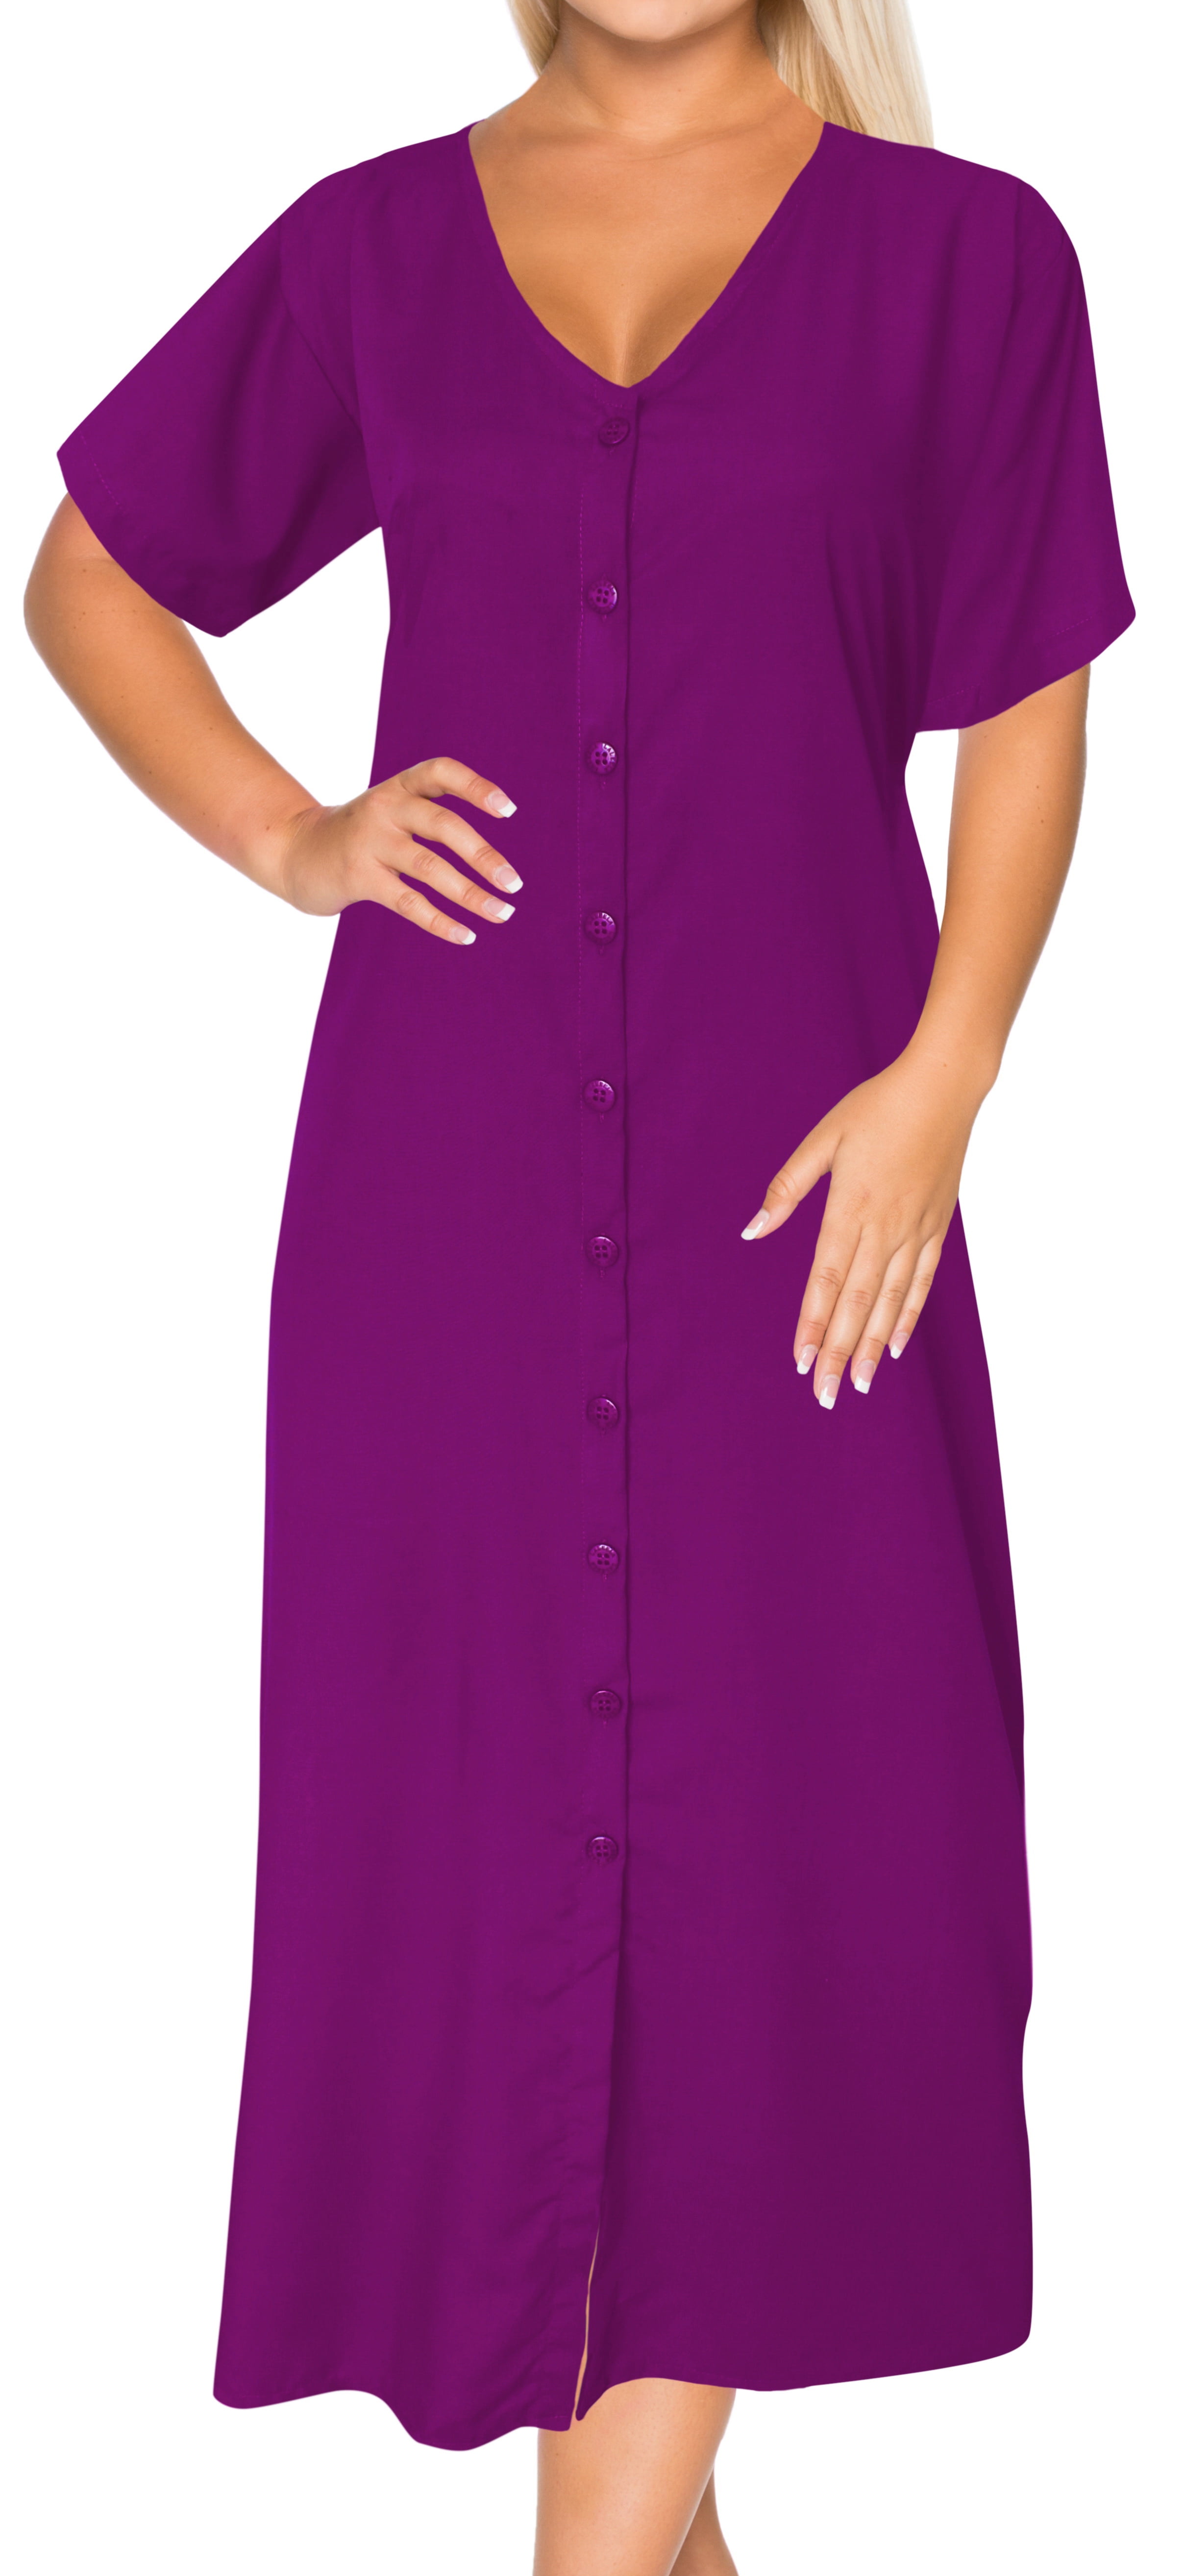 HAPPY BAY Women's Button Up Shirt Dress Beach Cover ups L-XL Purple ...